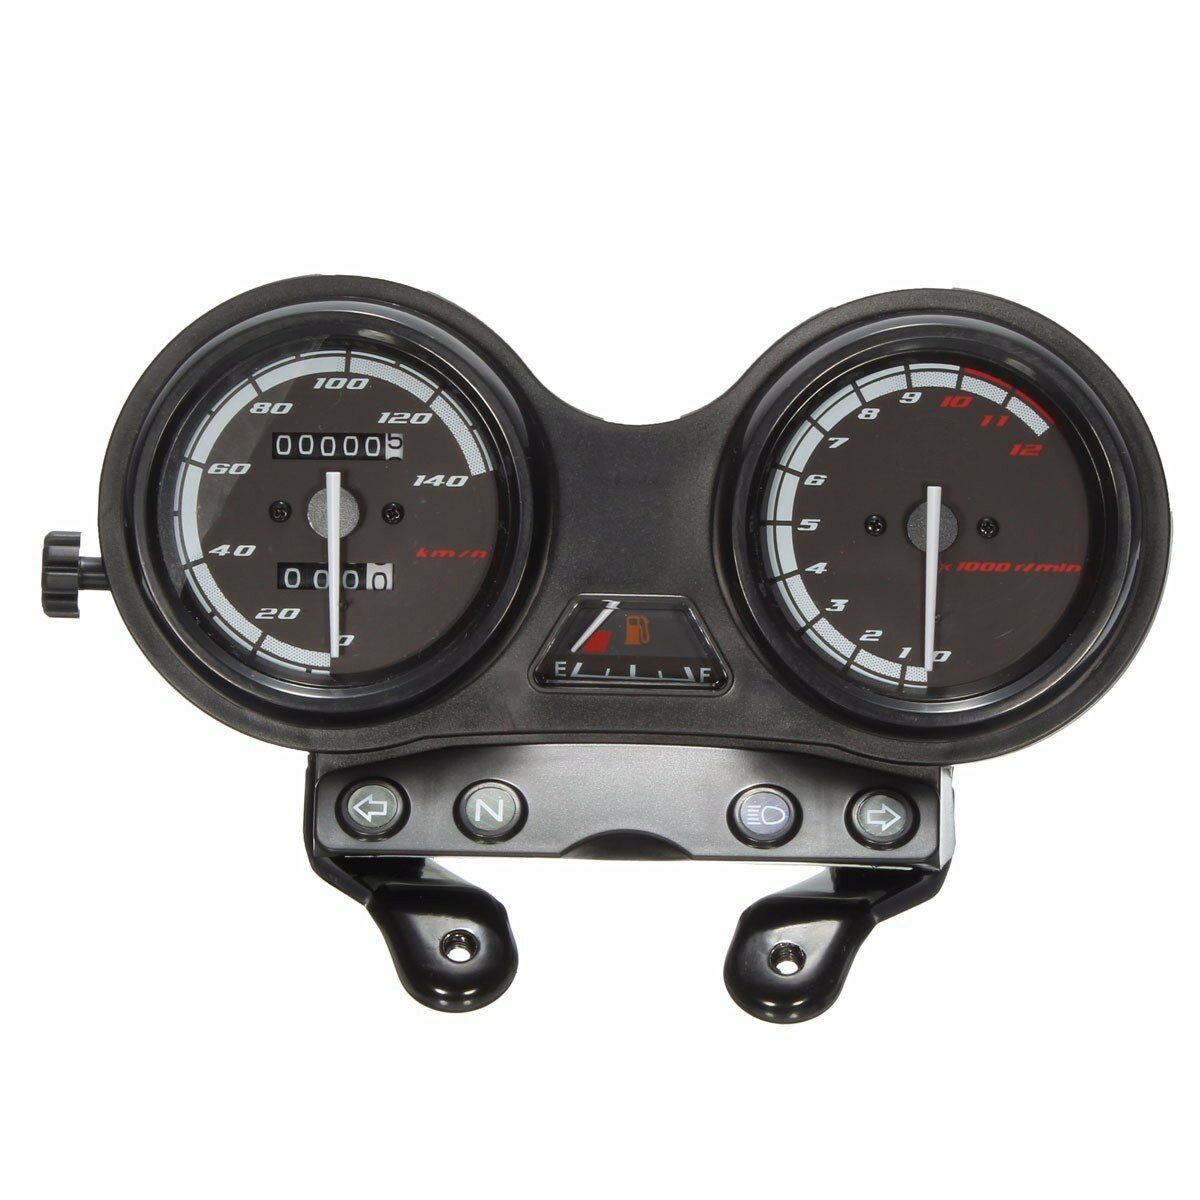 Motorrad-LCD-Tachometer mit 12000 U / min für Yamaha YBR 125